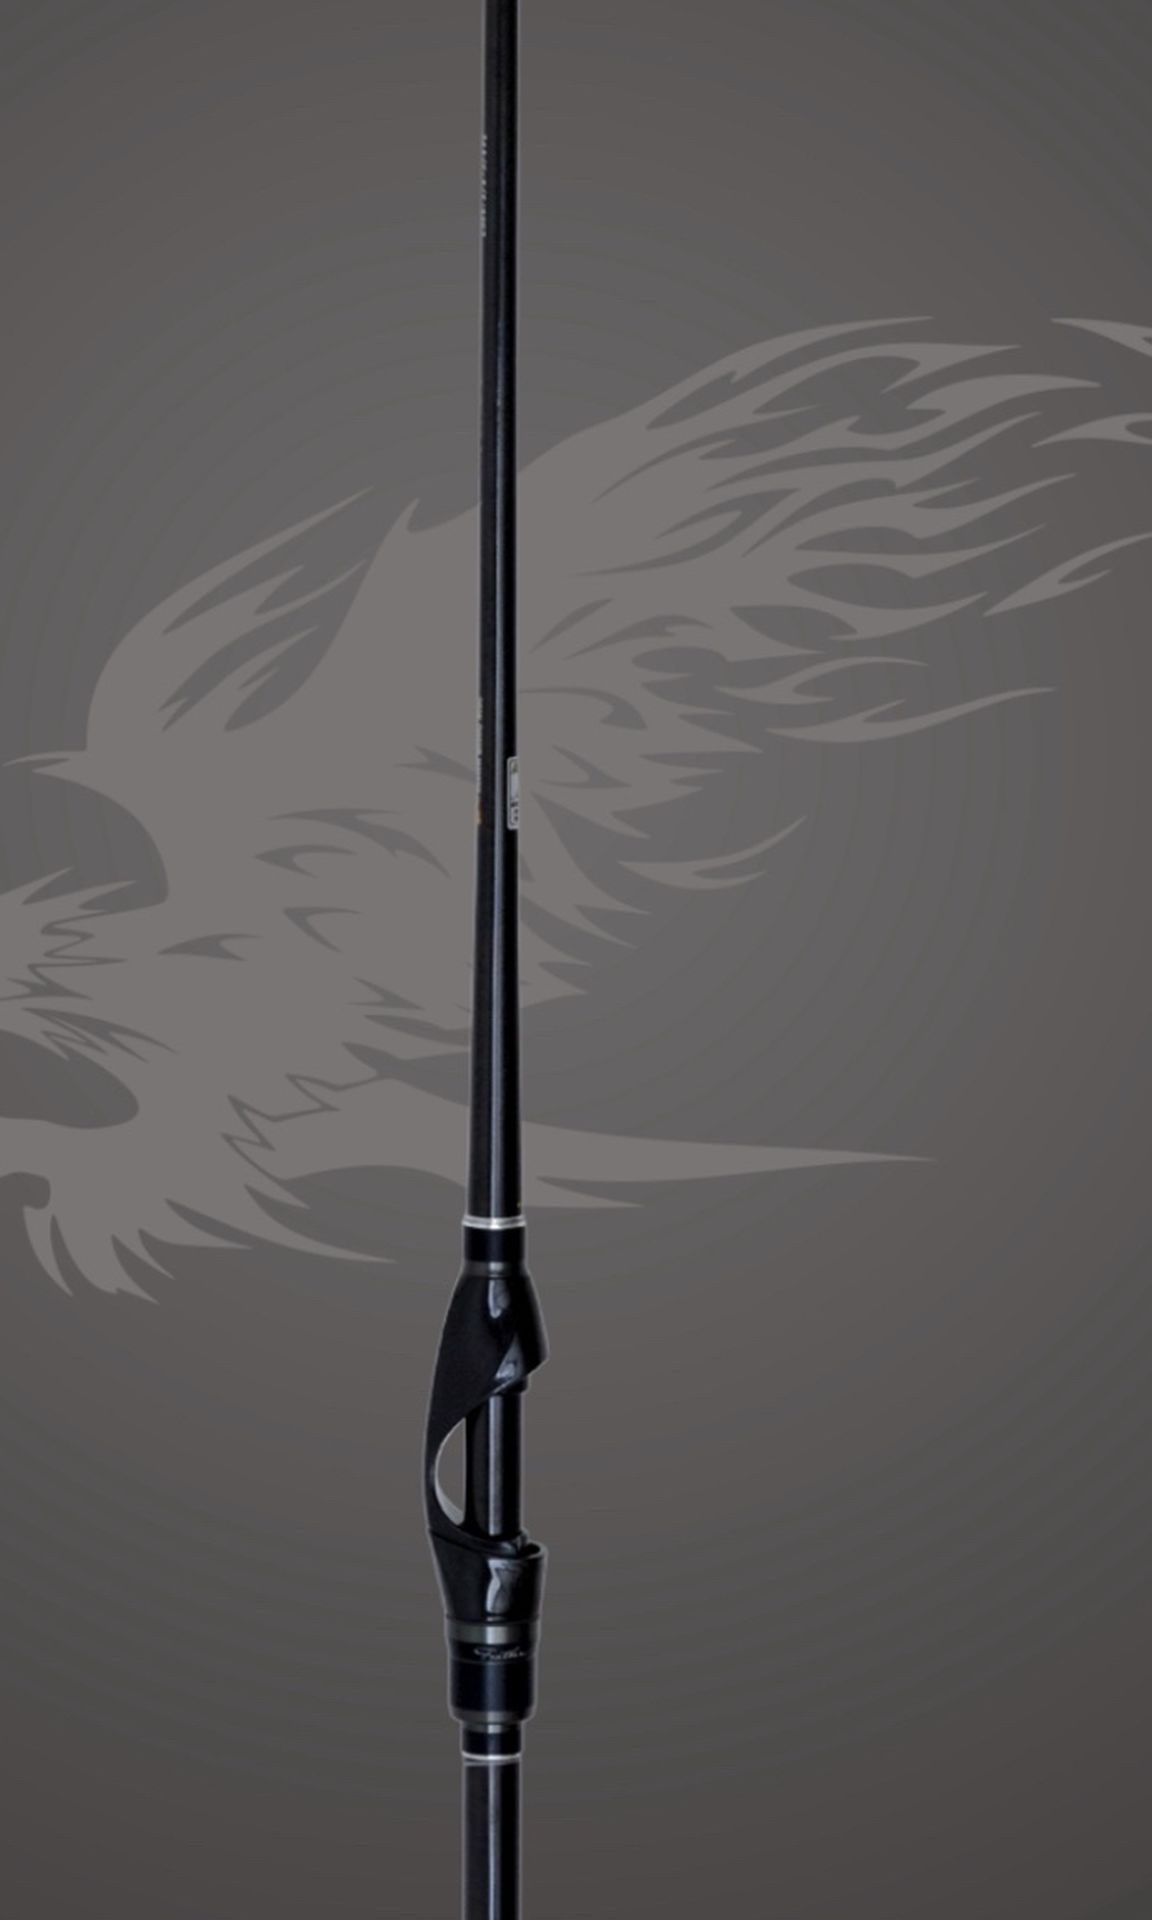 Phoenix feather fishing rod 8 Foot And A Daiwa Laguna 1000 Fishing Reel Combo , 220$